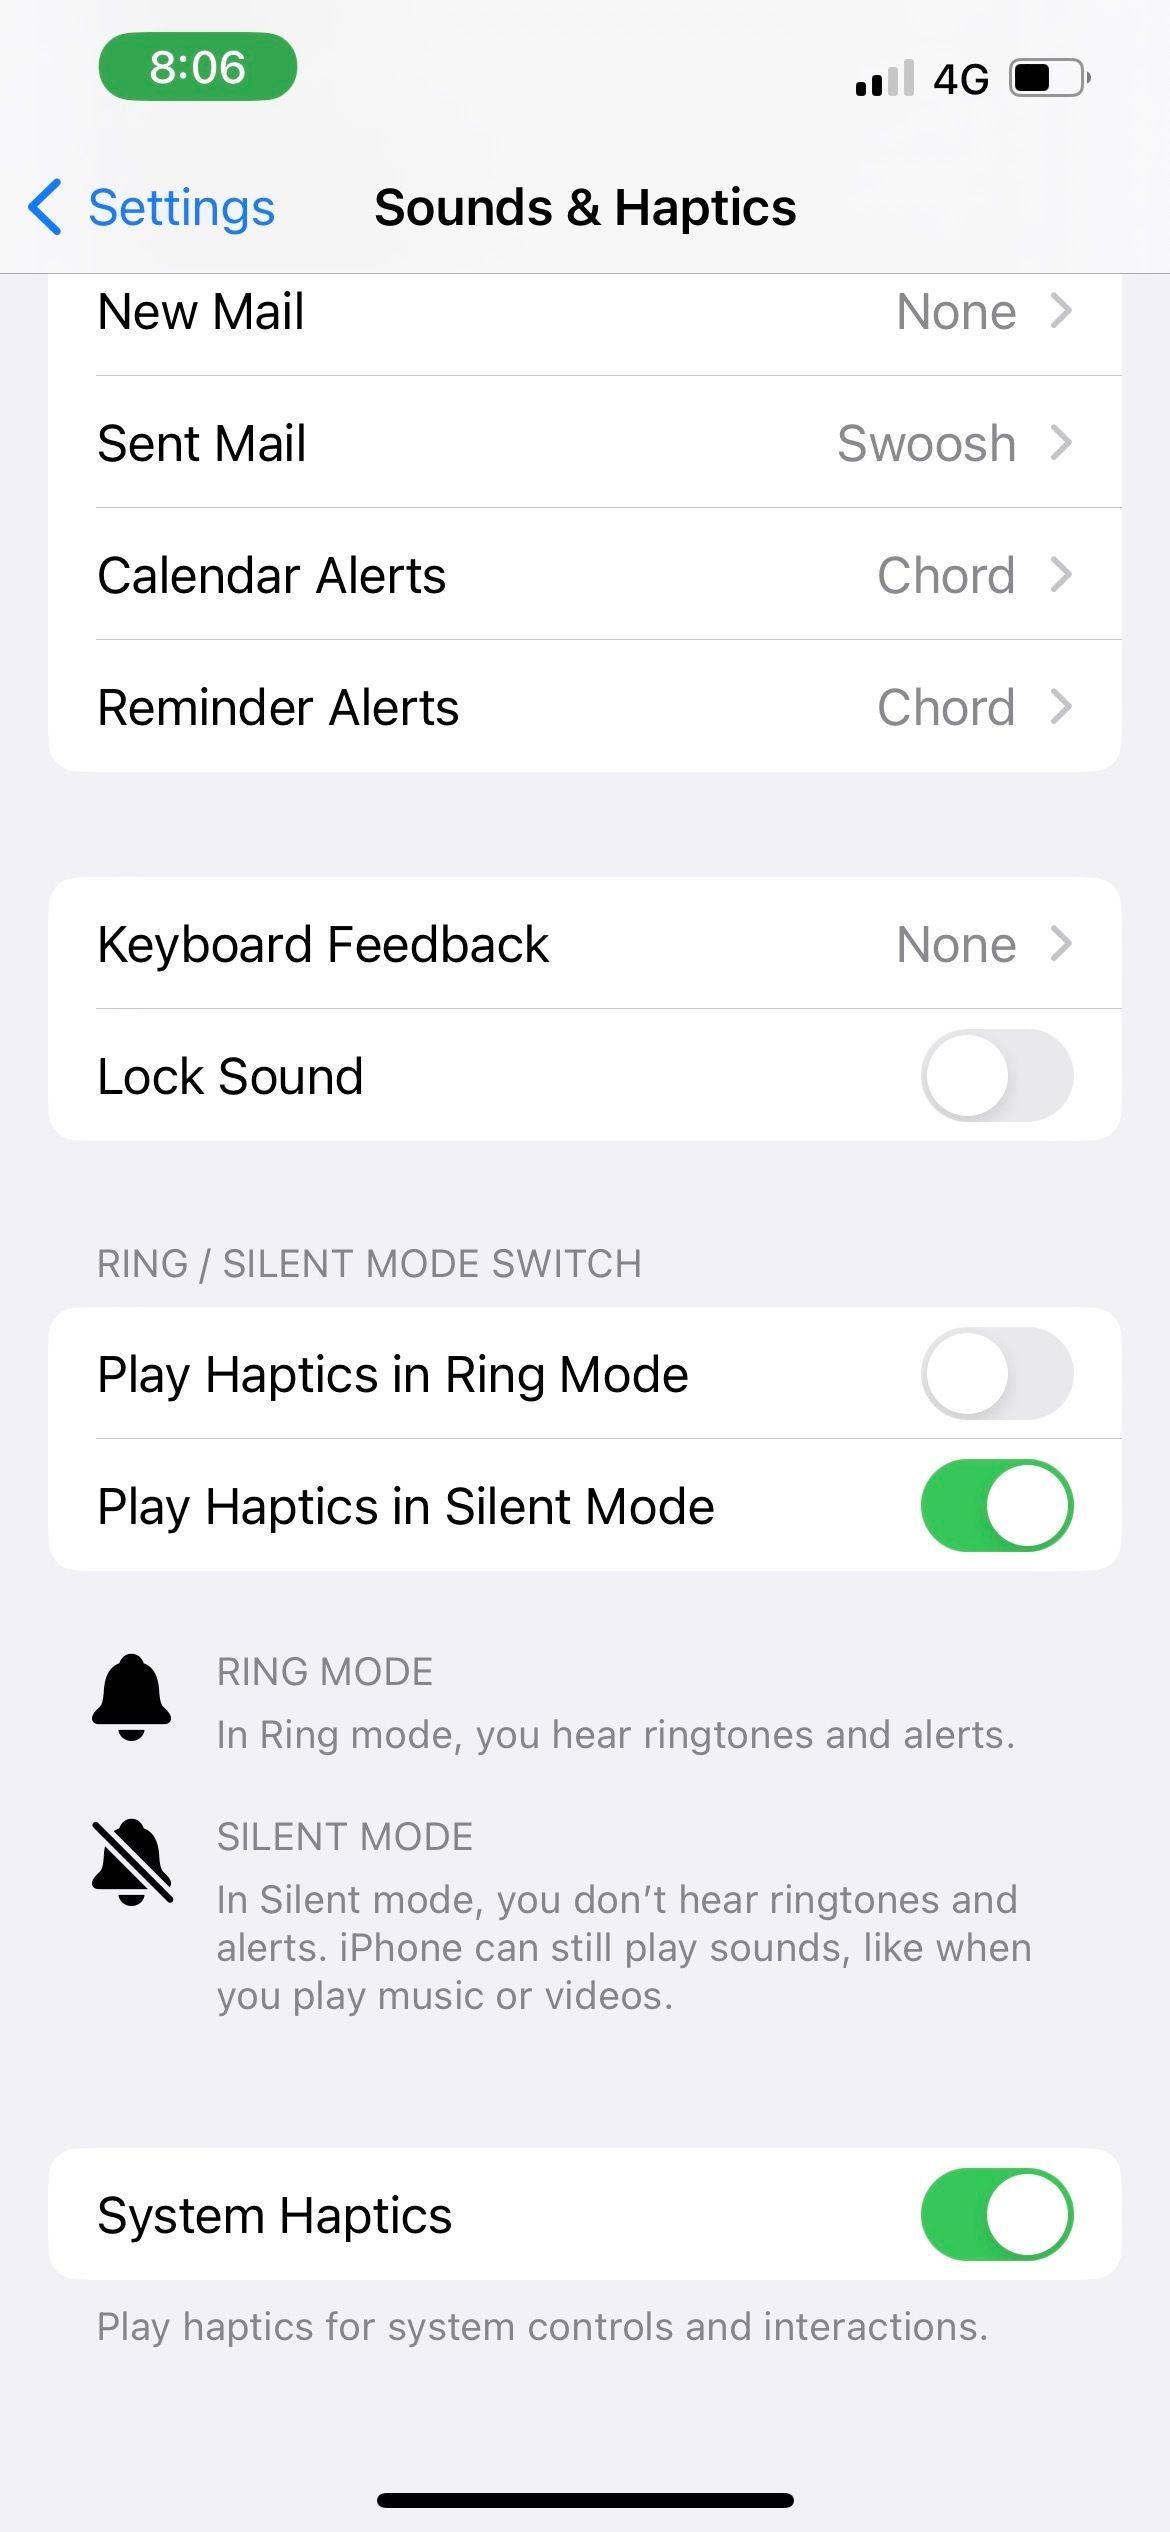 turn on play haptics in silent mode and system haptics